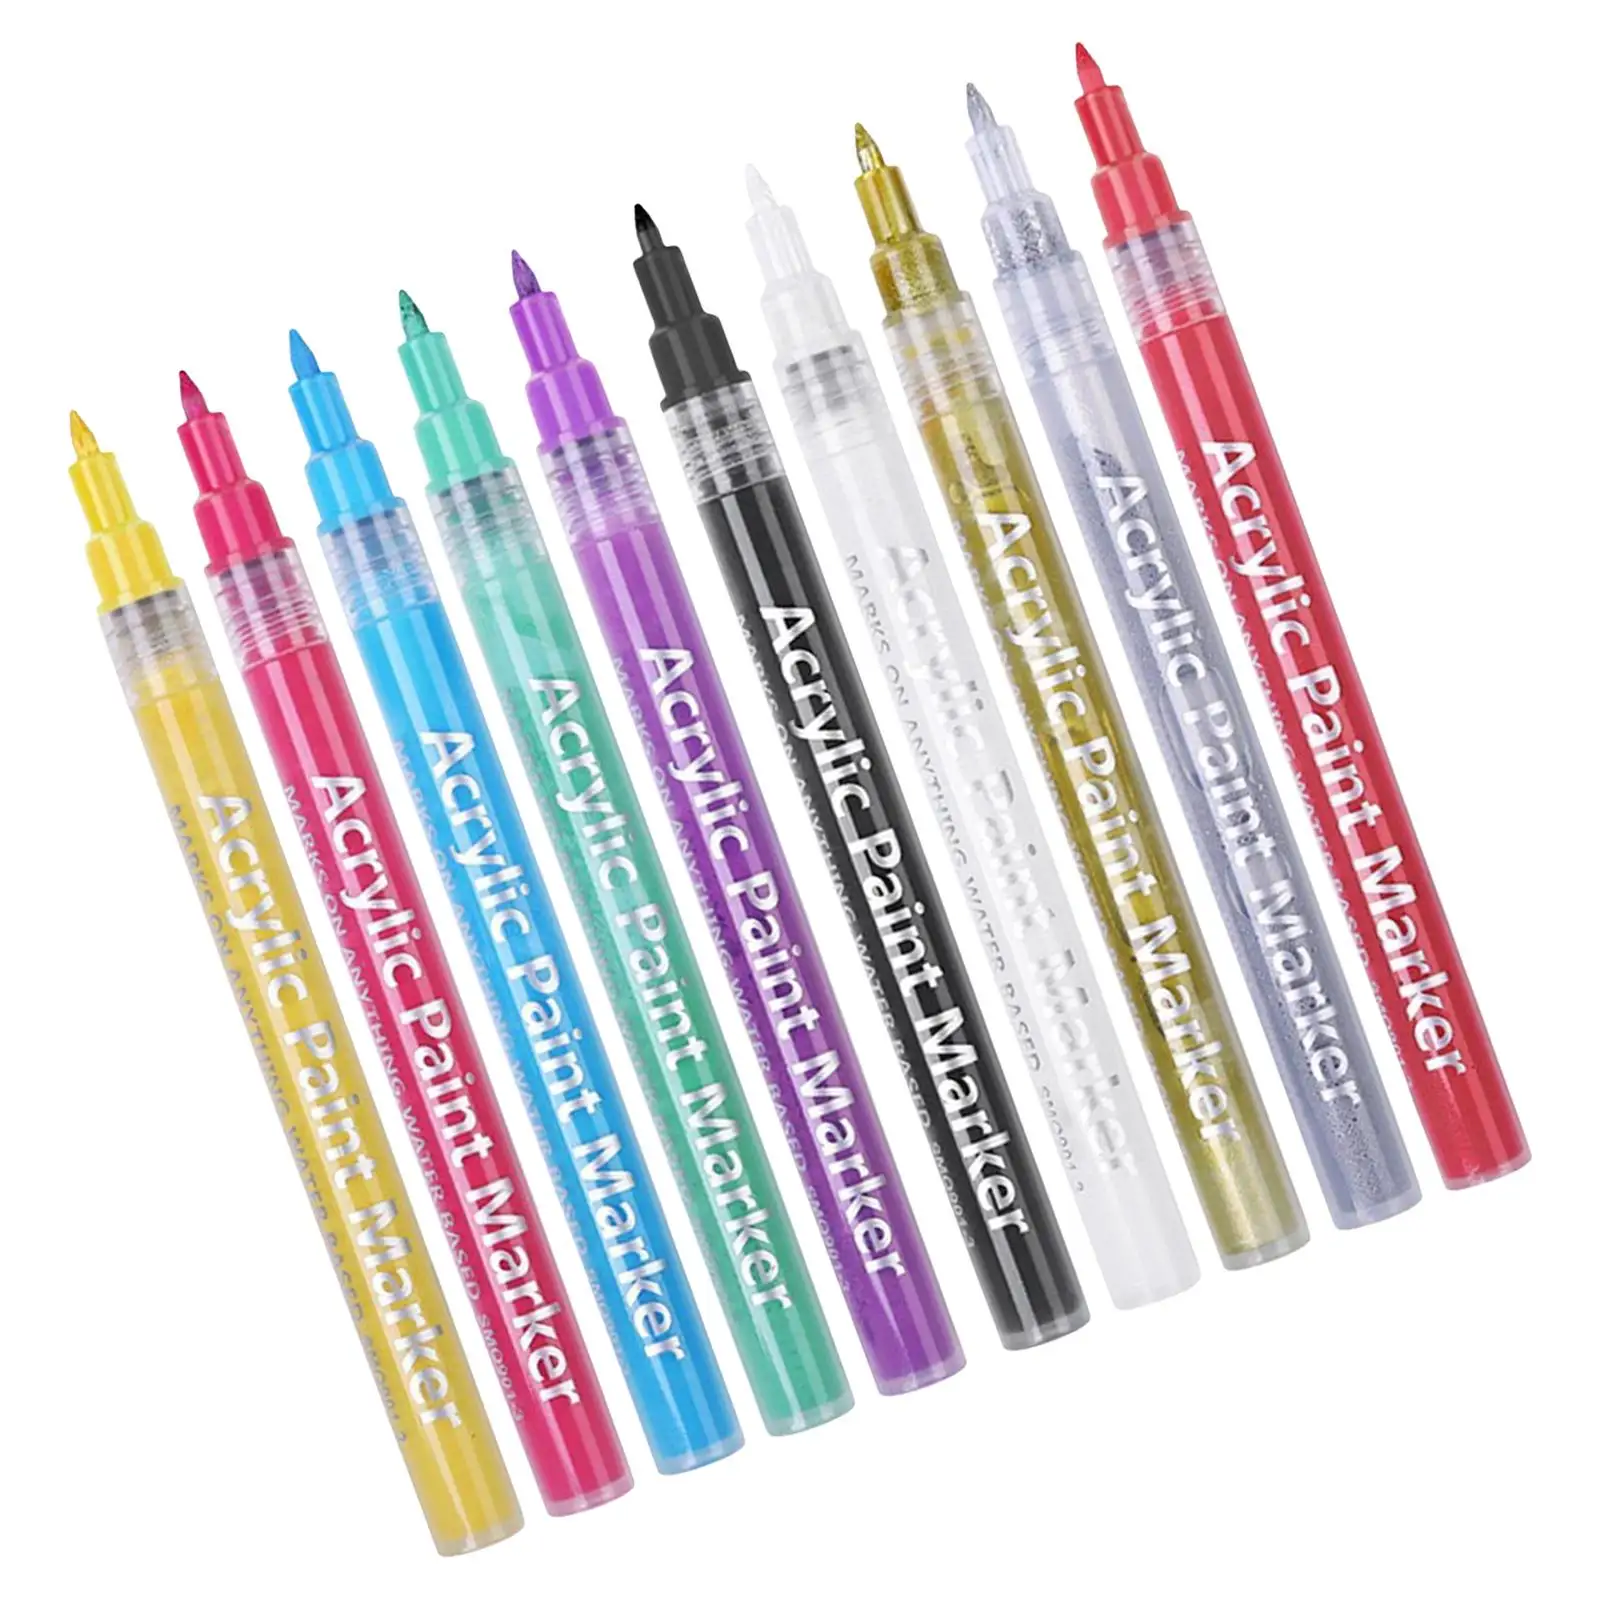 10Pcs Nail Art Graffiti Pen Adorn Tools Multi Colors DIY Flower Drawing Tools for Nail Salons Professional or Personal Use